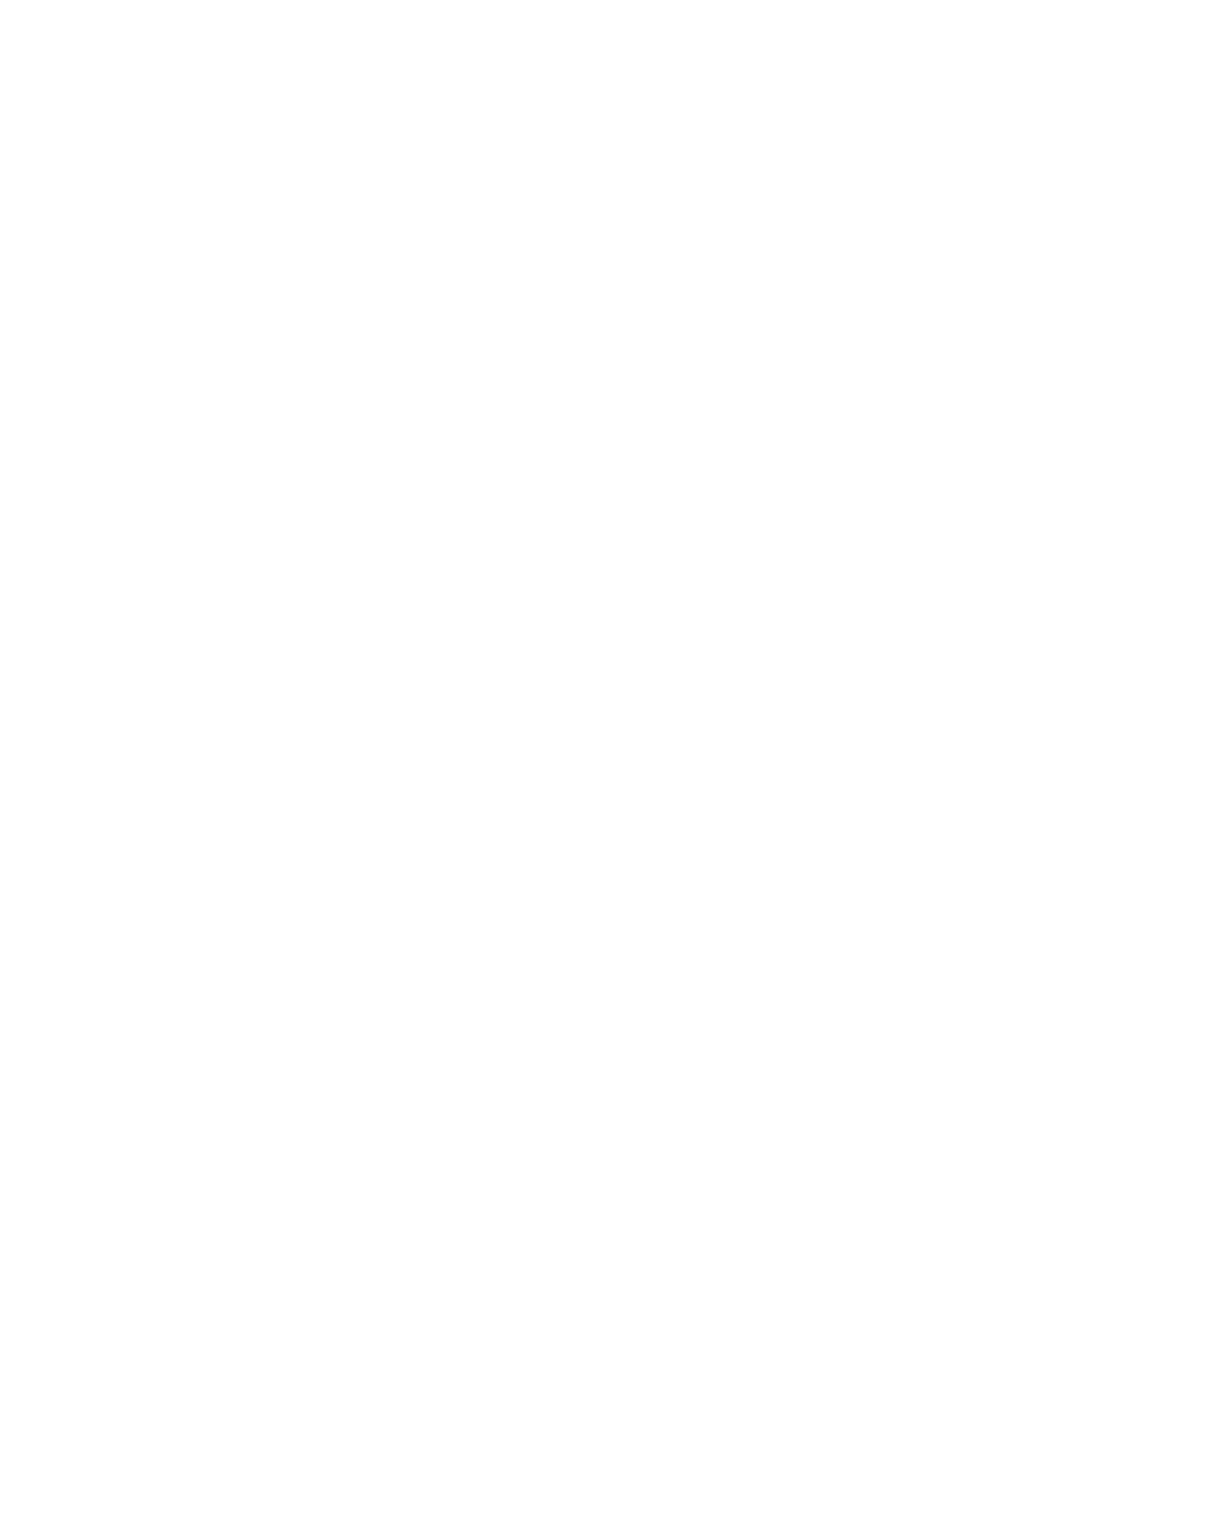 Teva Pharmaceutical Industries logo for dark backgrounds (transparent PNG)